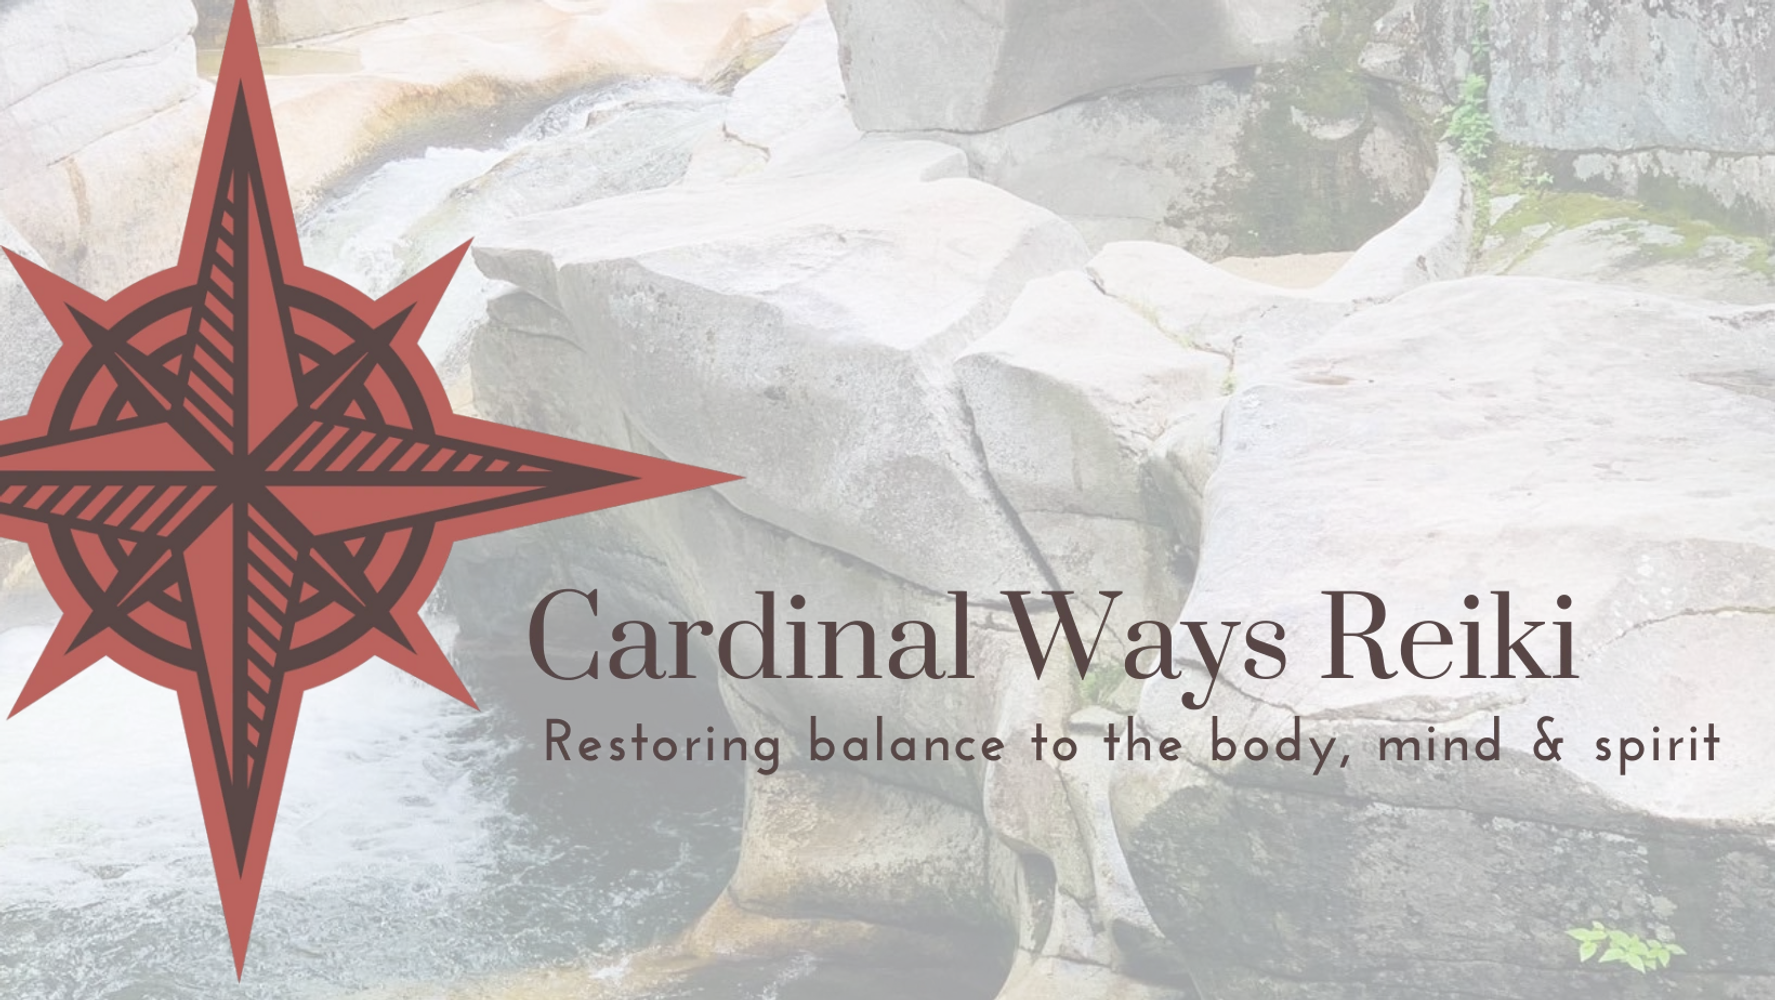 Cardinal Ways Reiki logo and motto Restoring balance to the body, mind and spirit